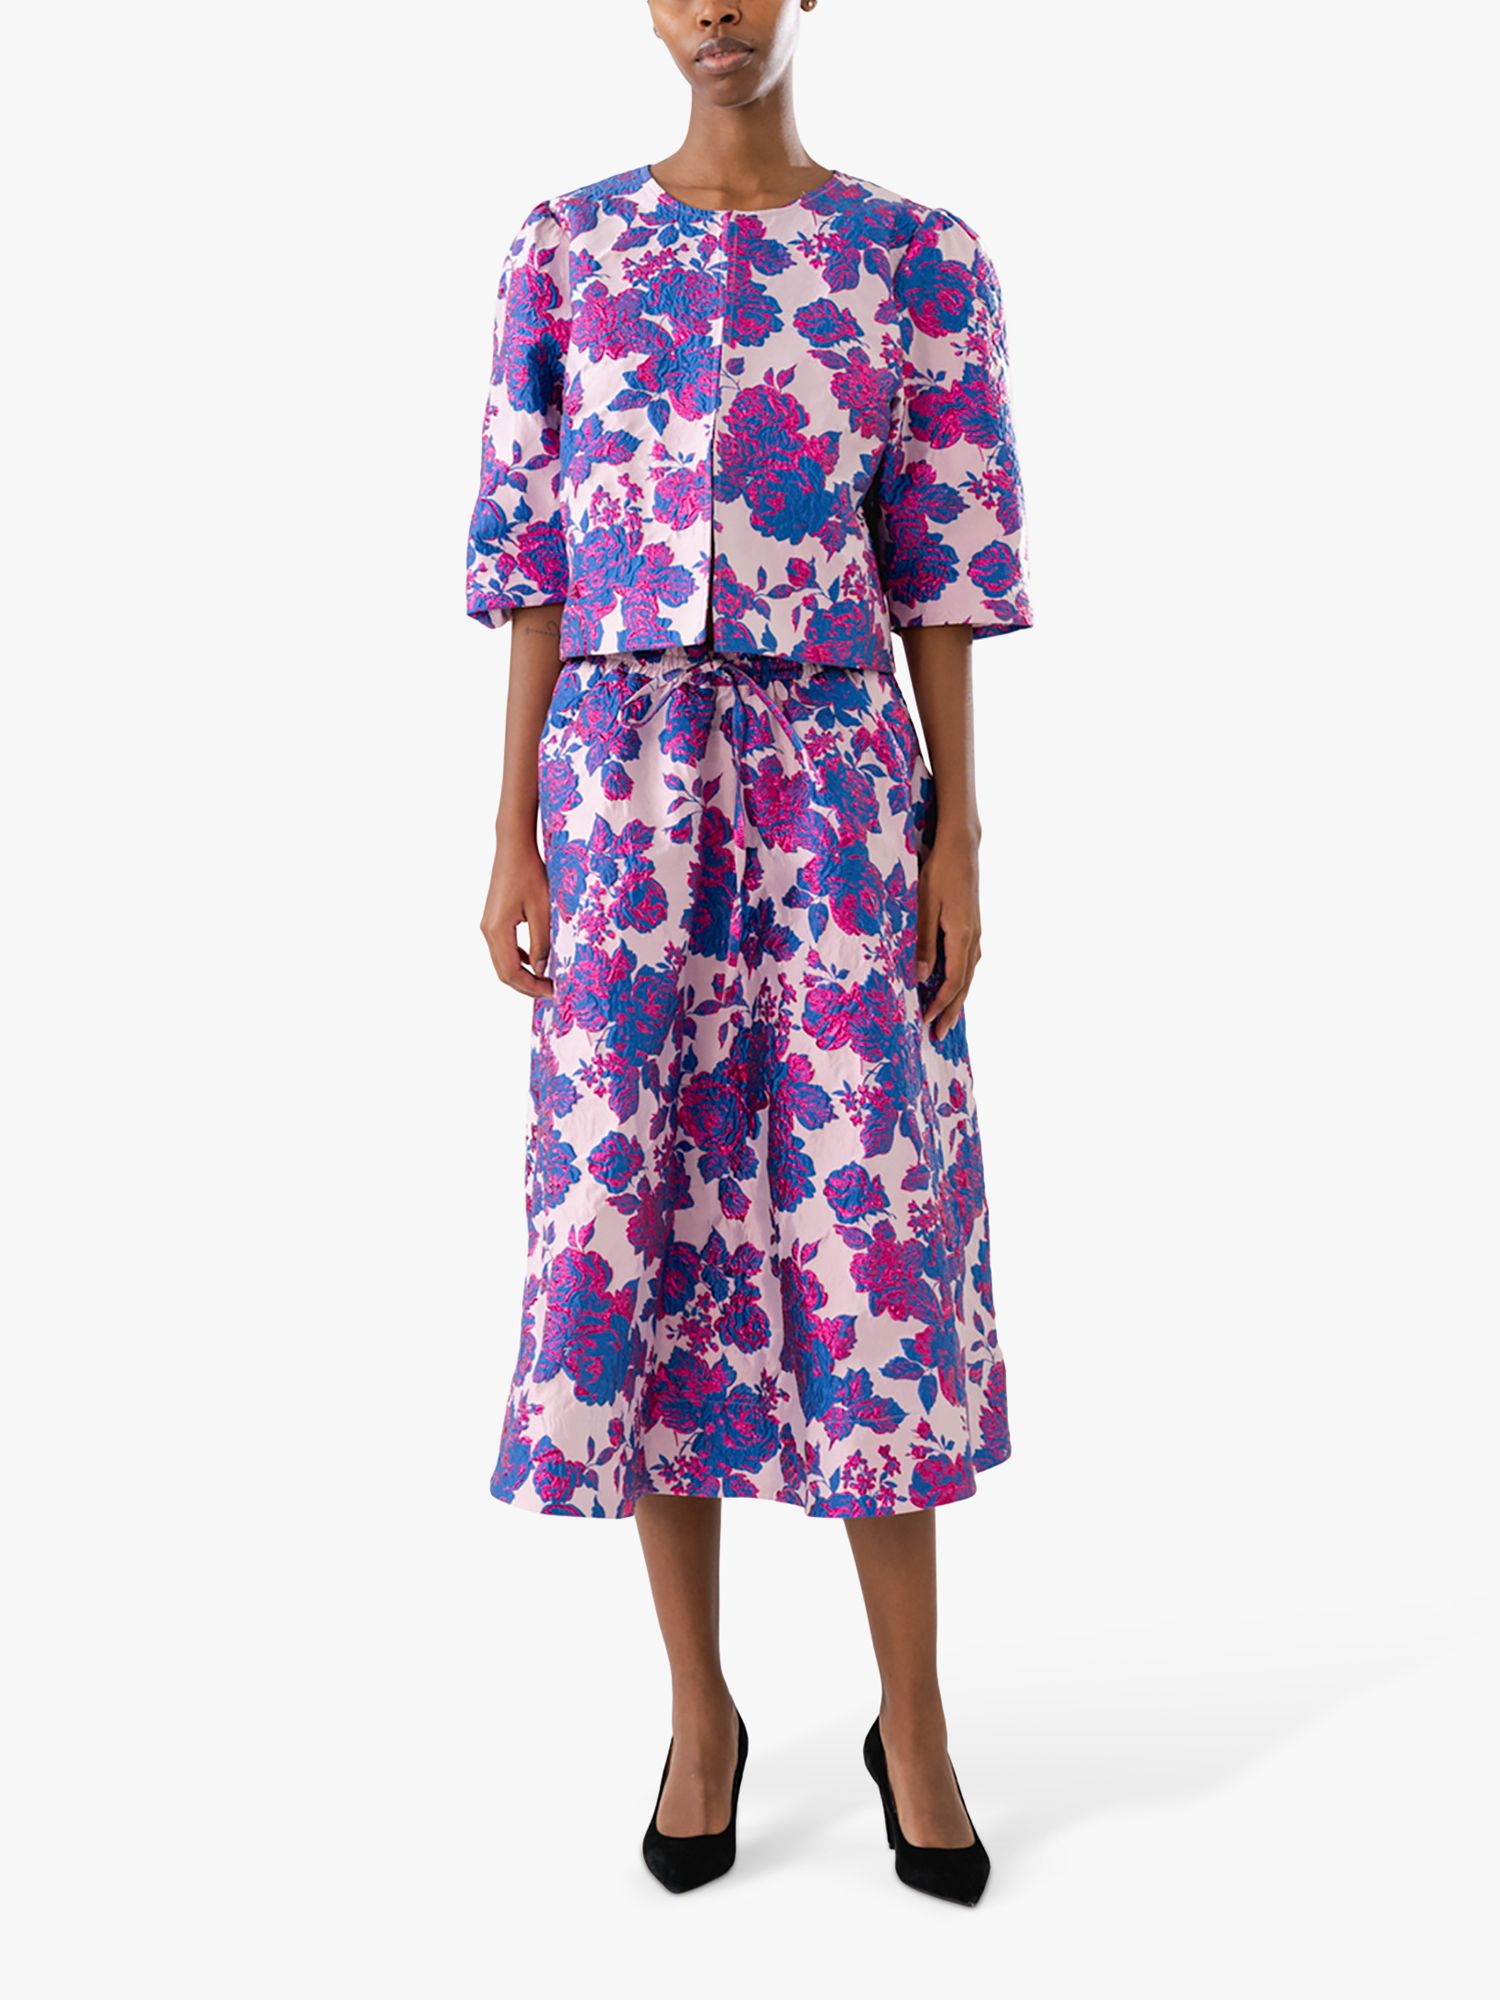 Buy Lollys Laundry Bristol Floral Midi Skirt, Dark Lavender/Multi Online at johnlewis.com